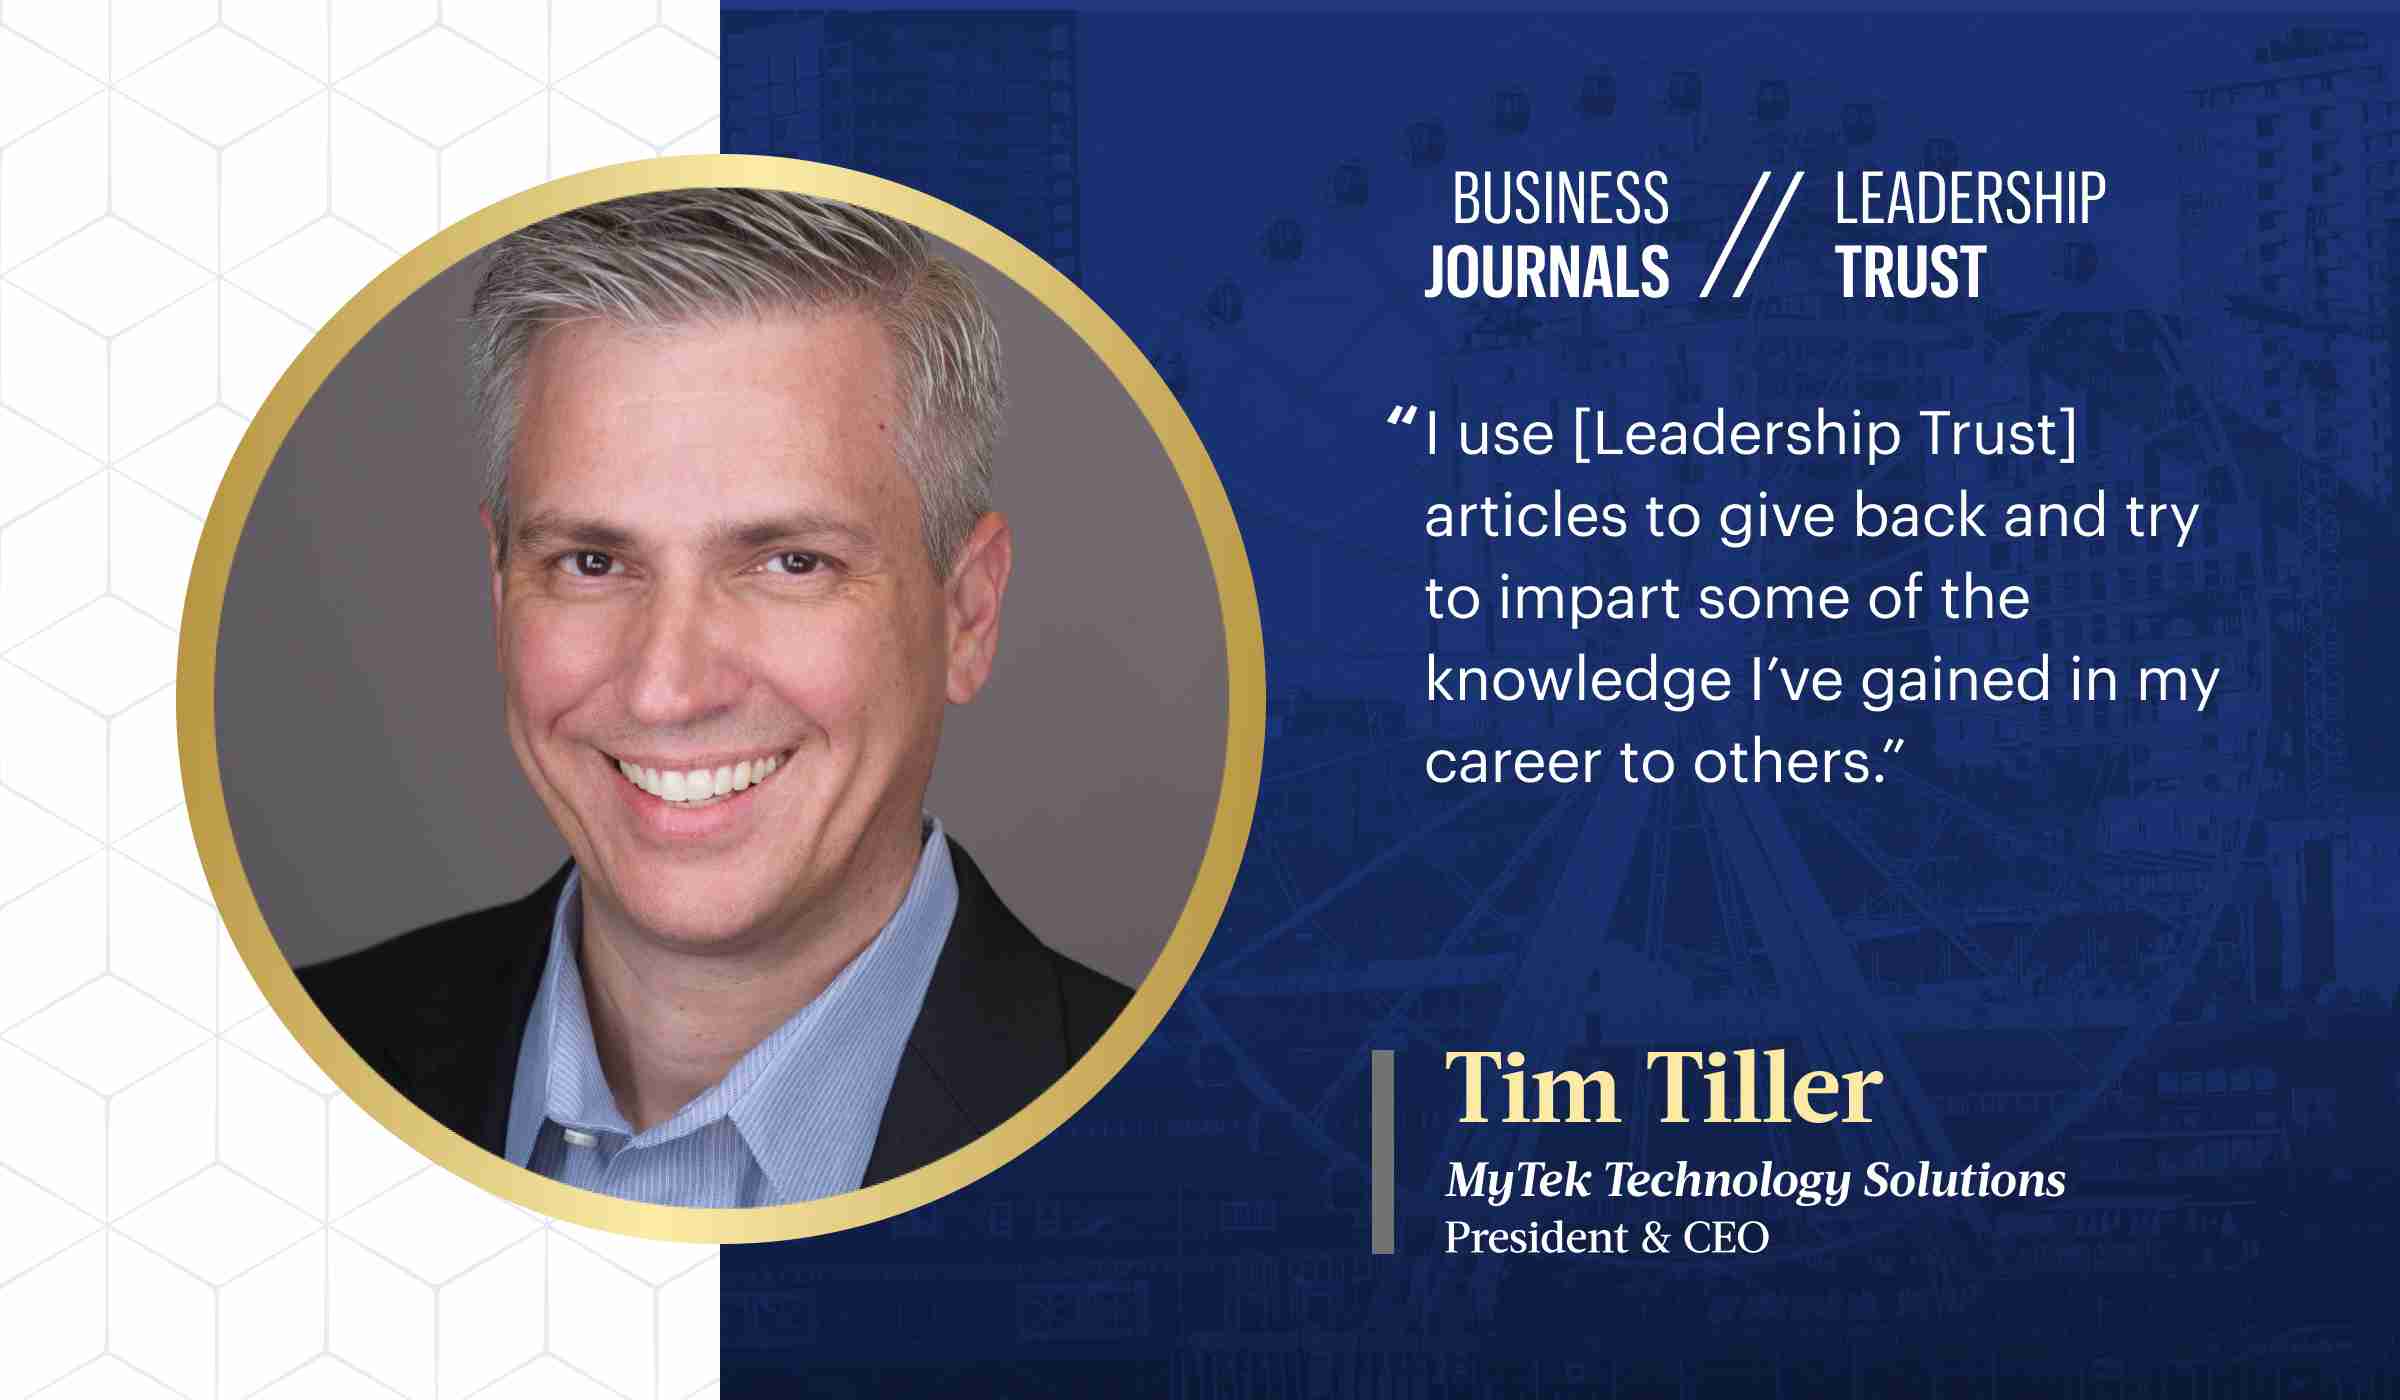 Phoenix Business Journal Leadership Trust member Tim Tiller